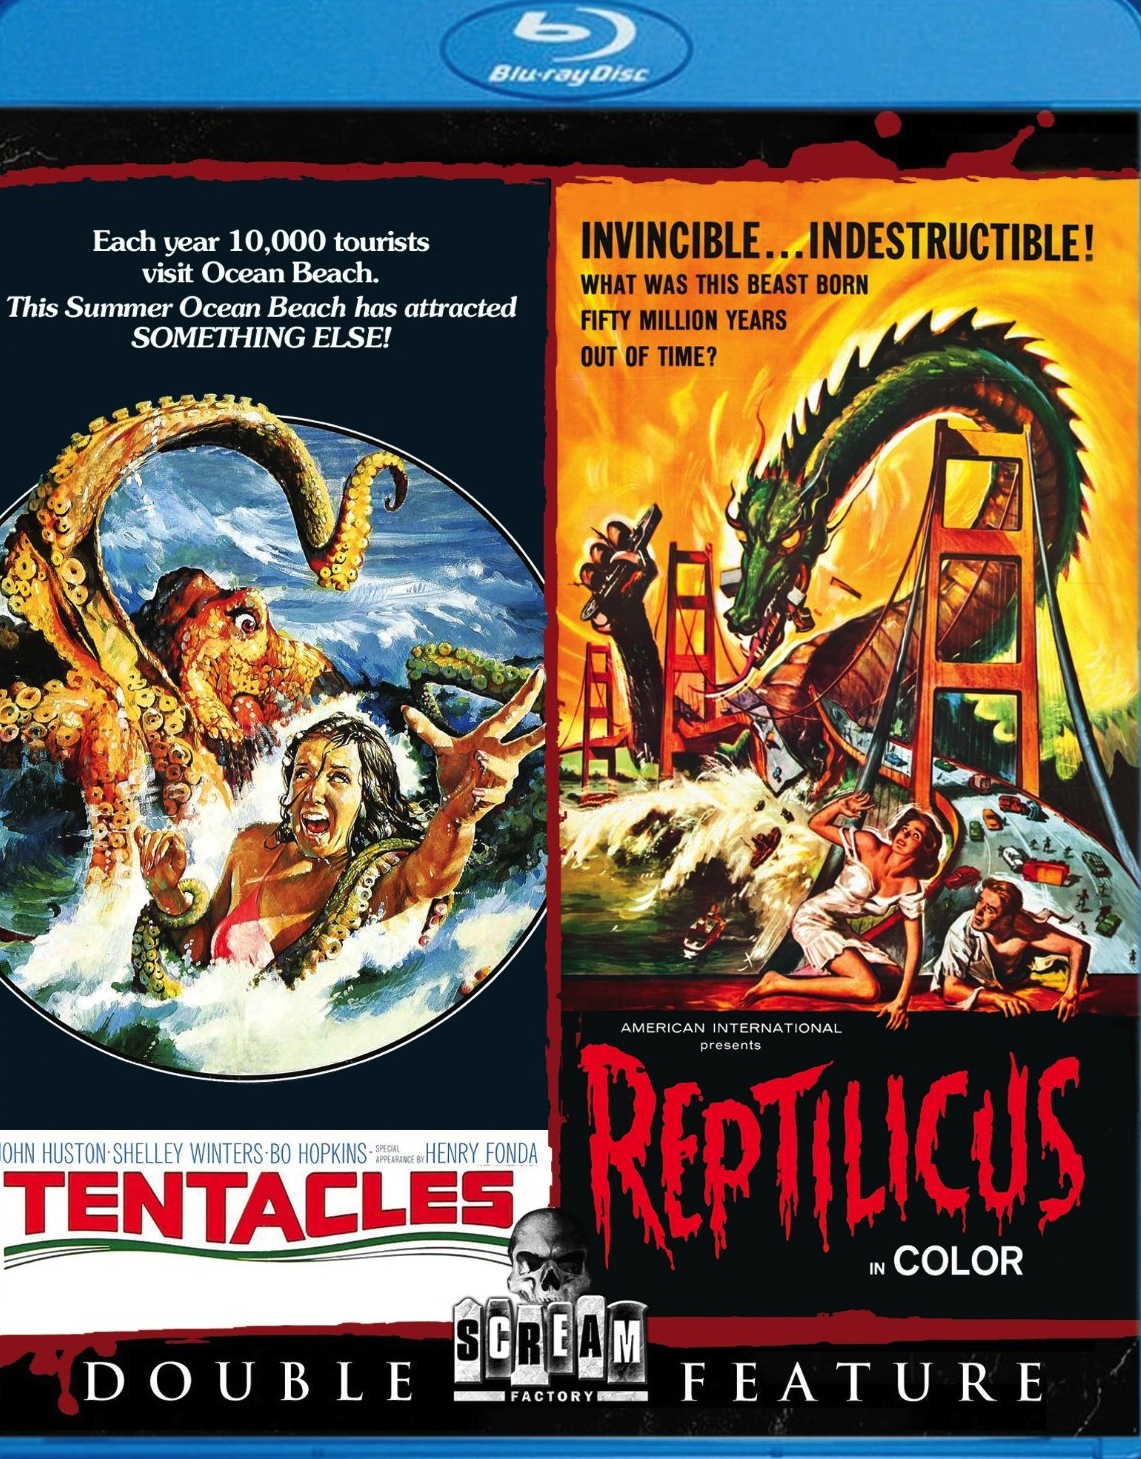 Tentacles / Reptilicus